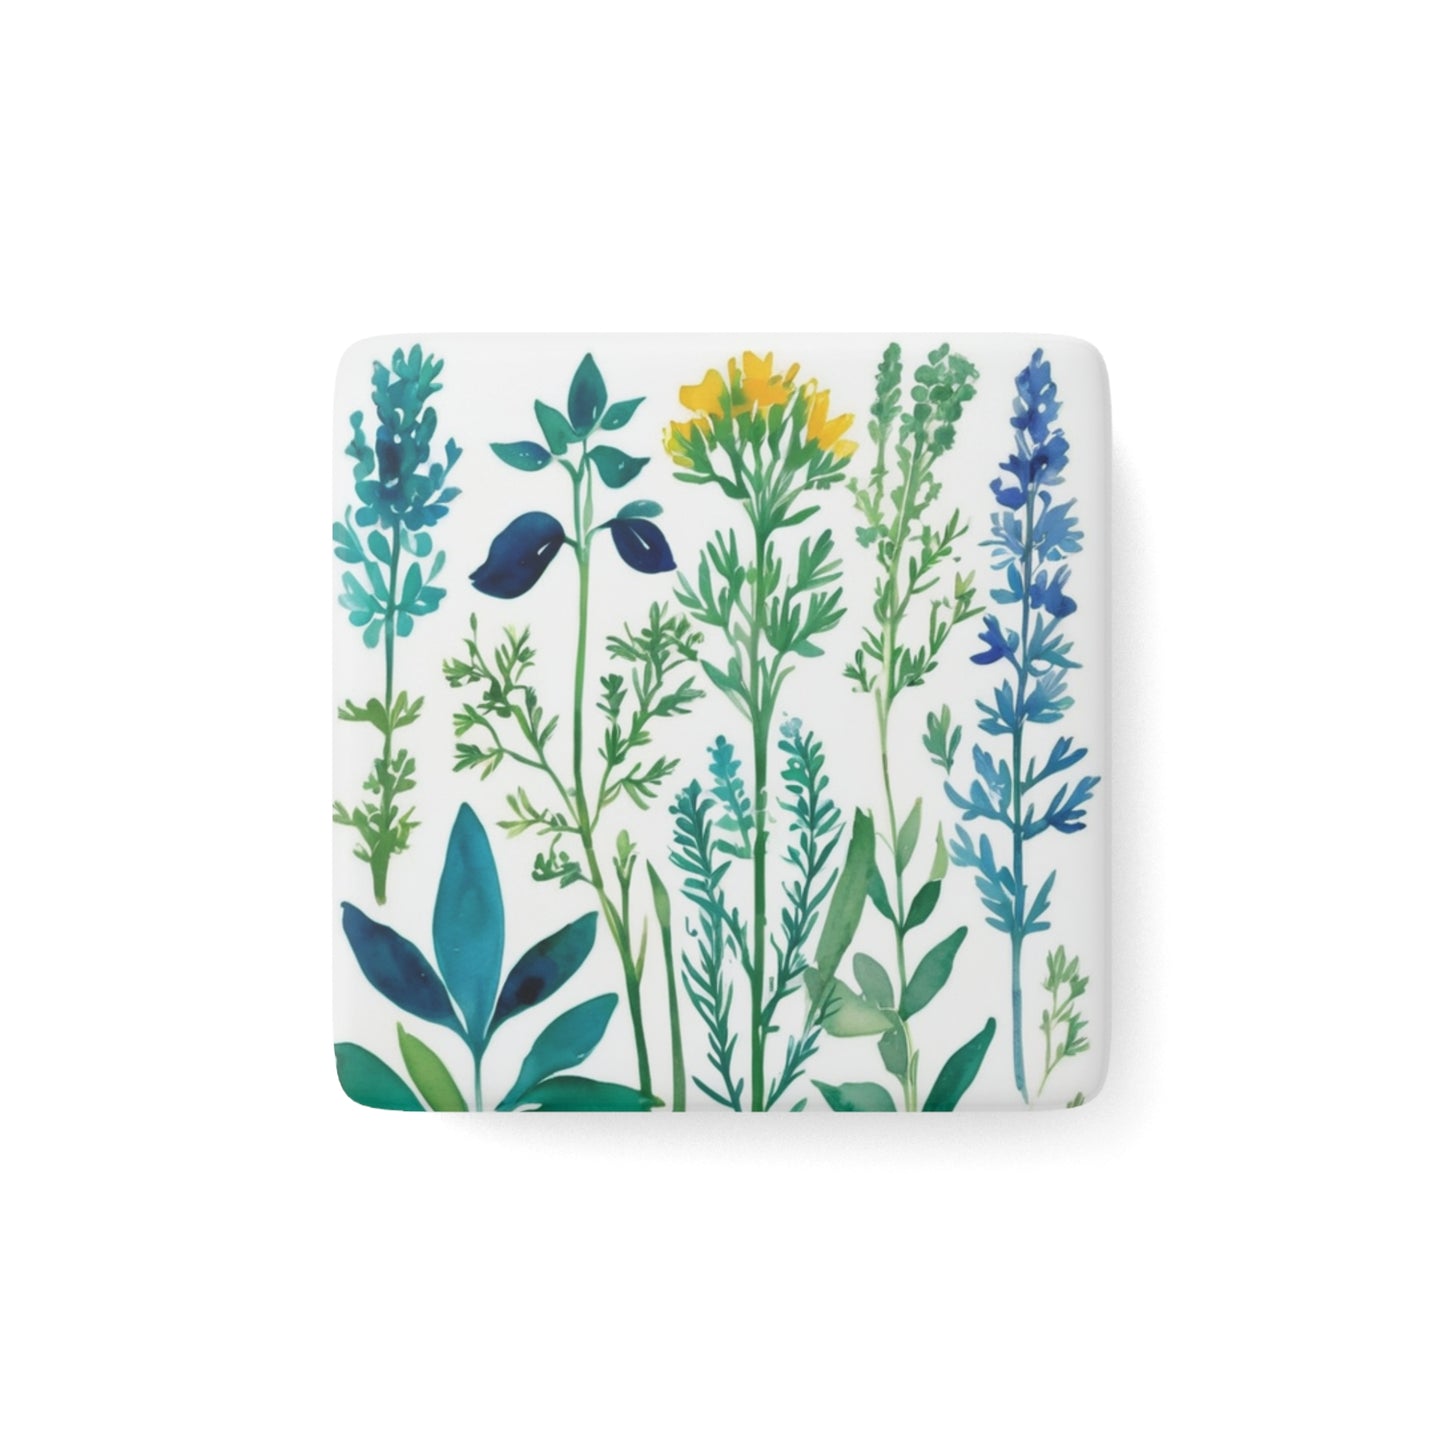 Spring Herbs Decorative Refrigerator  Magnet, Square